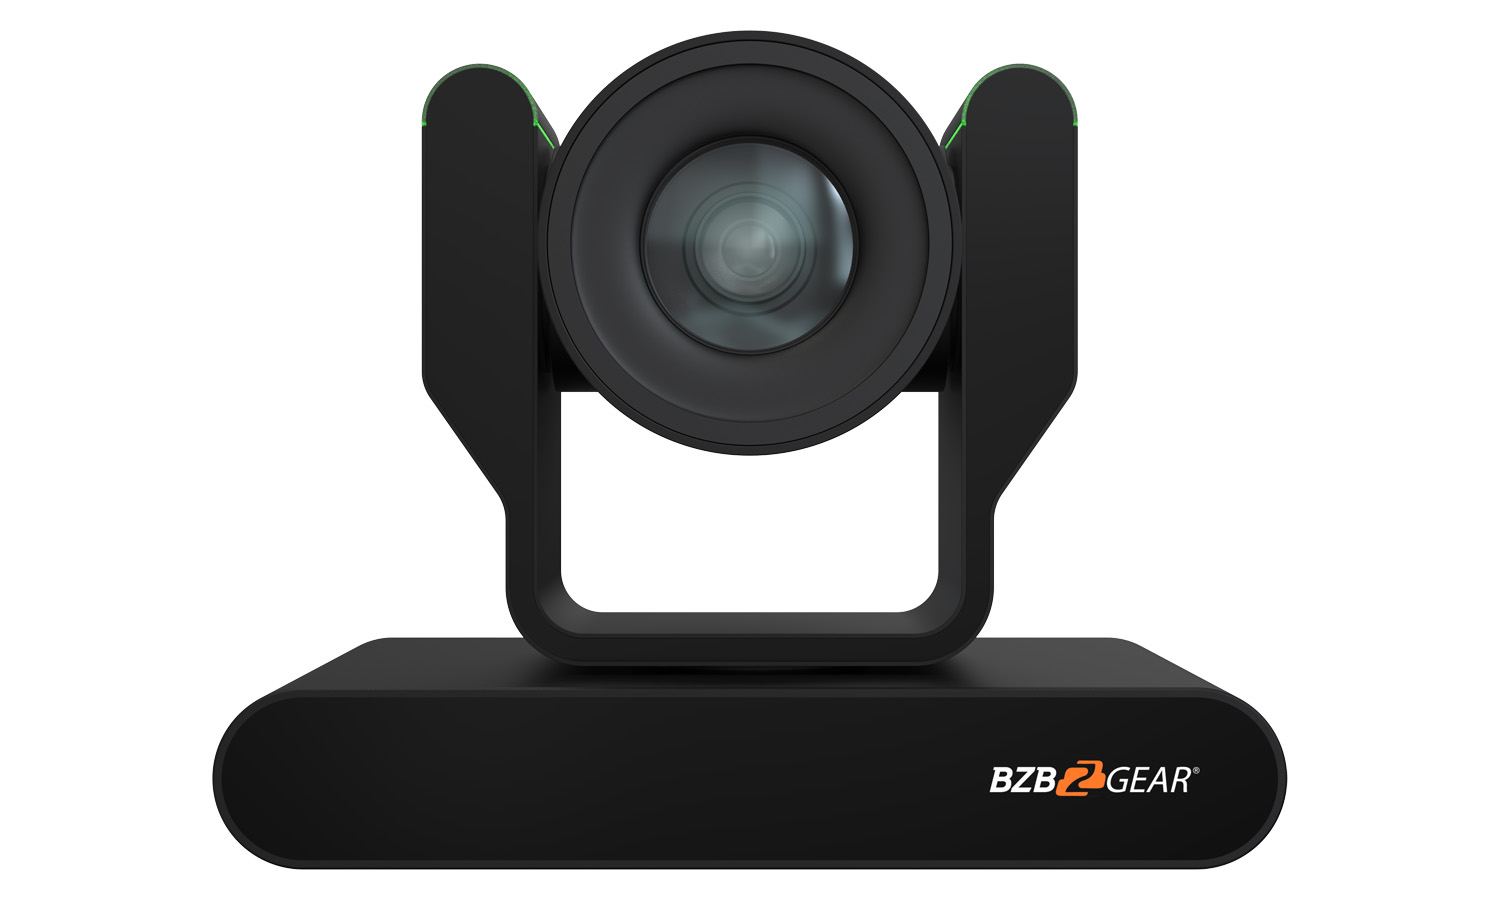 BG-ADAMO-4K25X-B 25X 4K UHD AUTO TRACKING HDMI 2.0/12G-SDI/USB 2.0/USB 3.0/POE Live Streaming PTZ Camera with Tally Lights (Black) by BZBGEAR